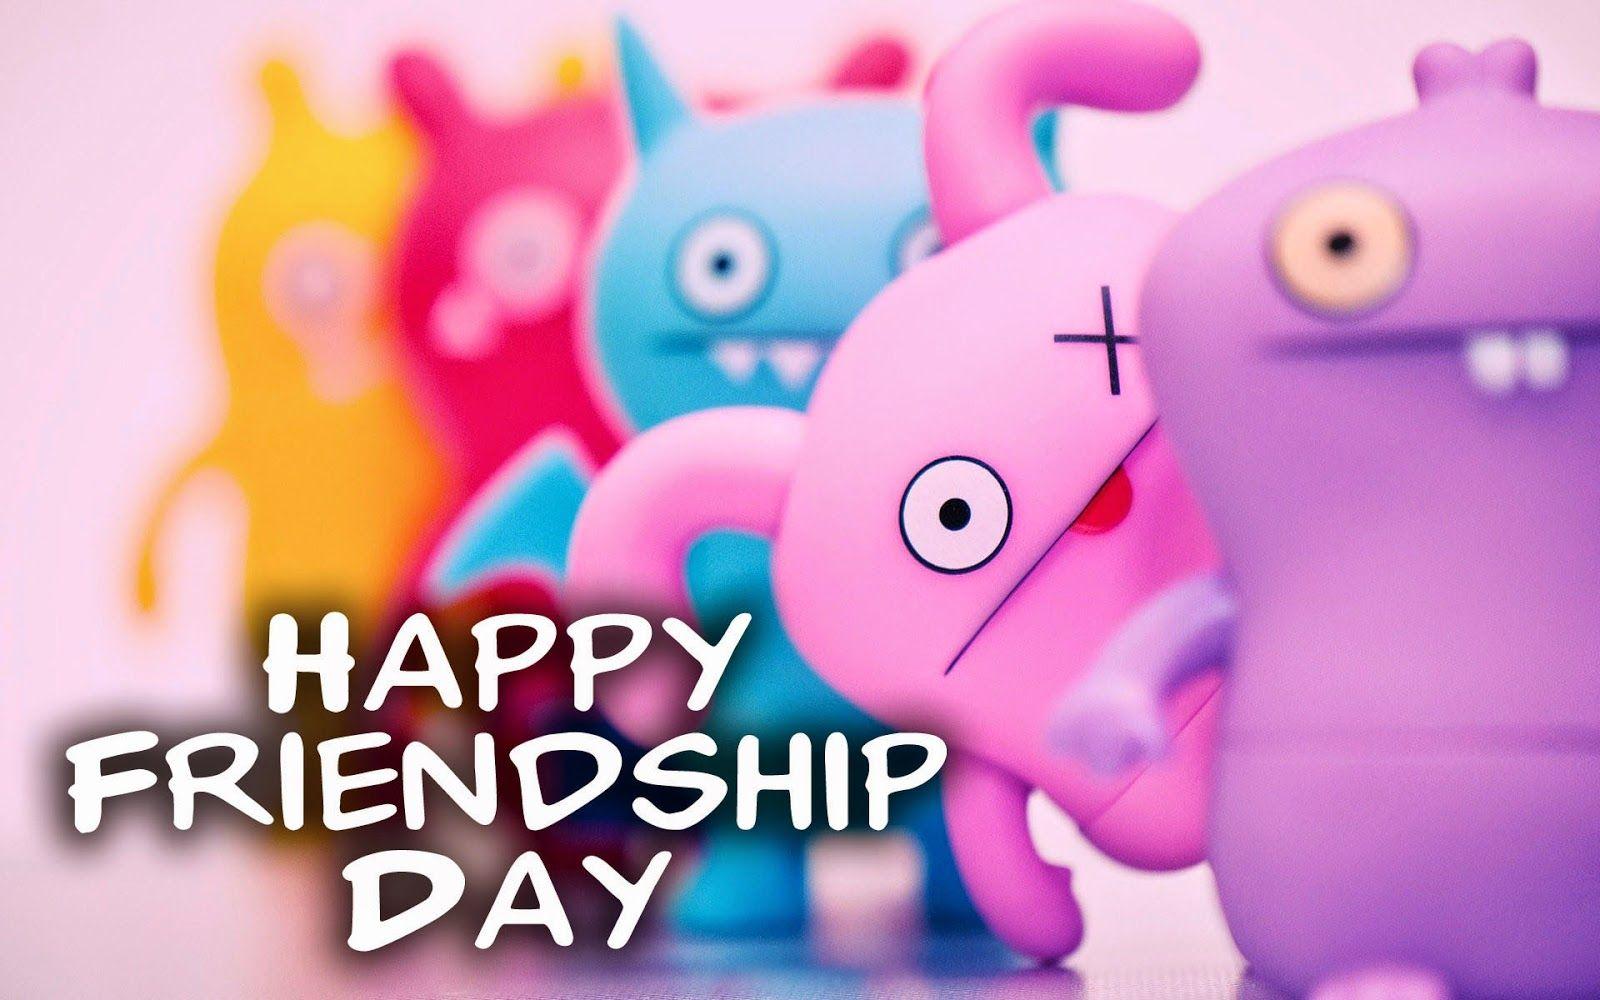 Happy Friendship day 2015 HD wallpaper pics free download